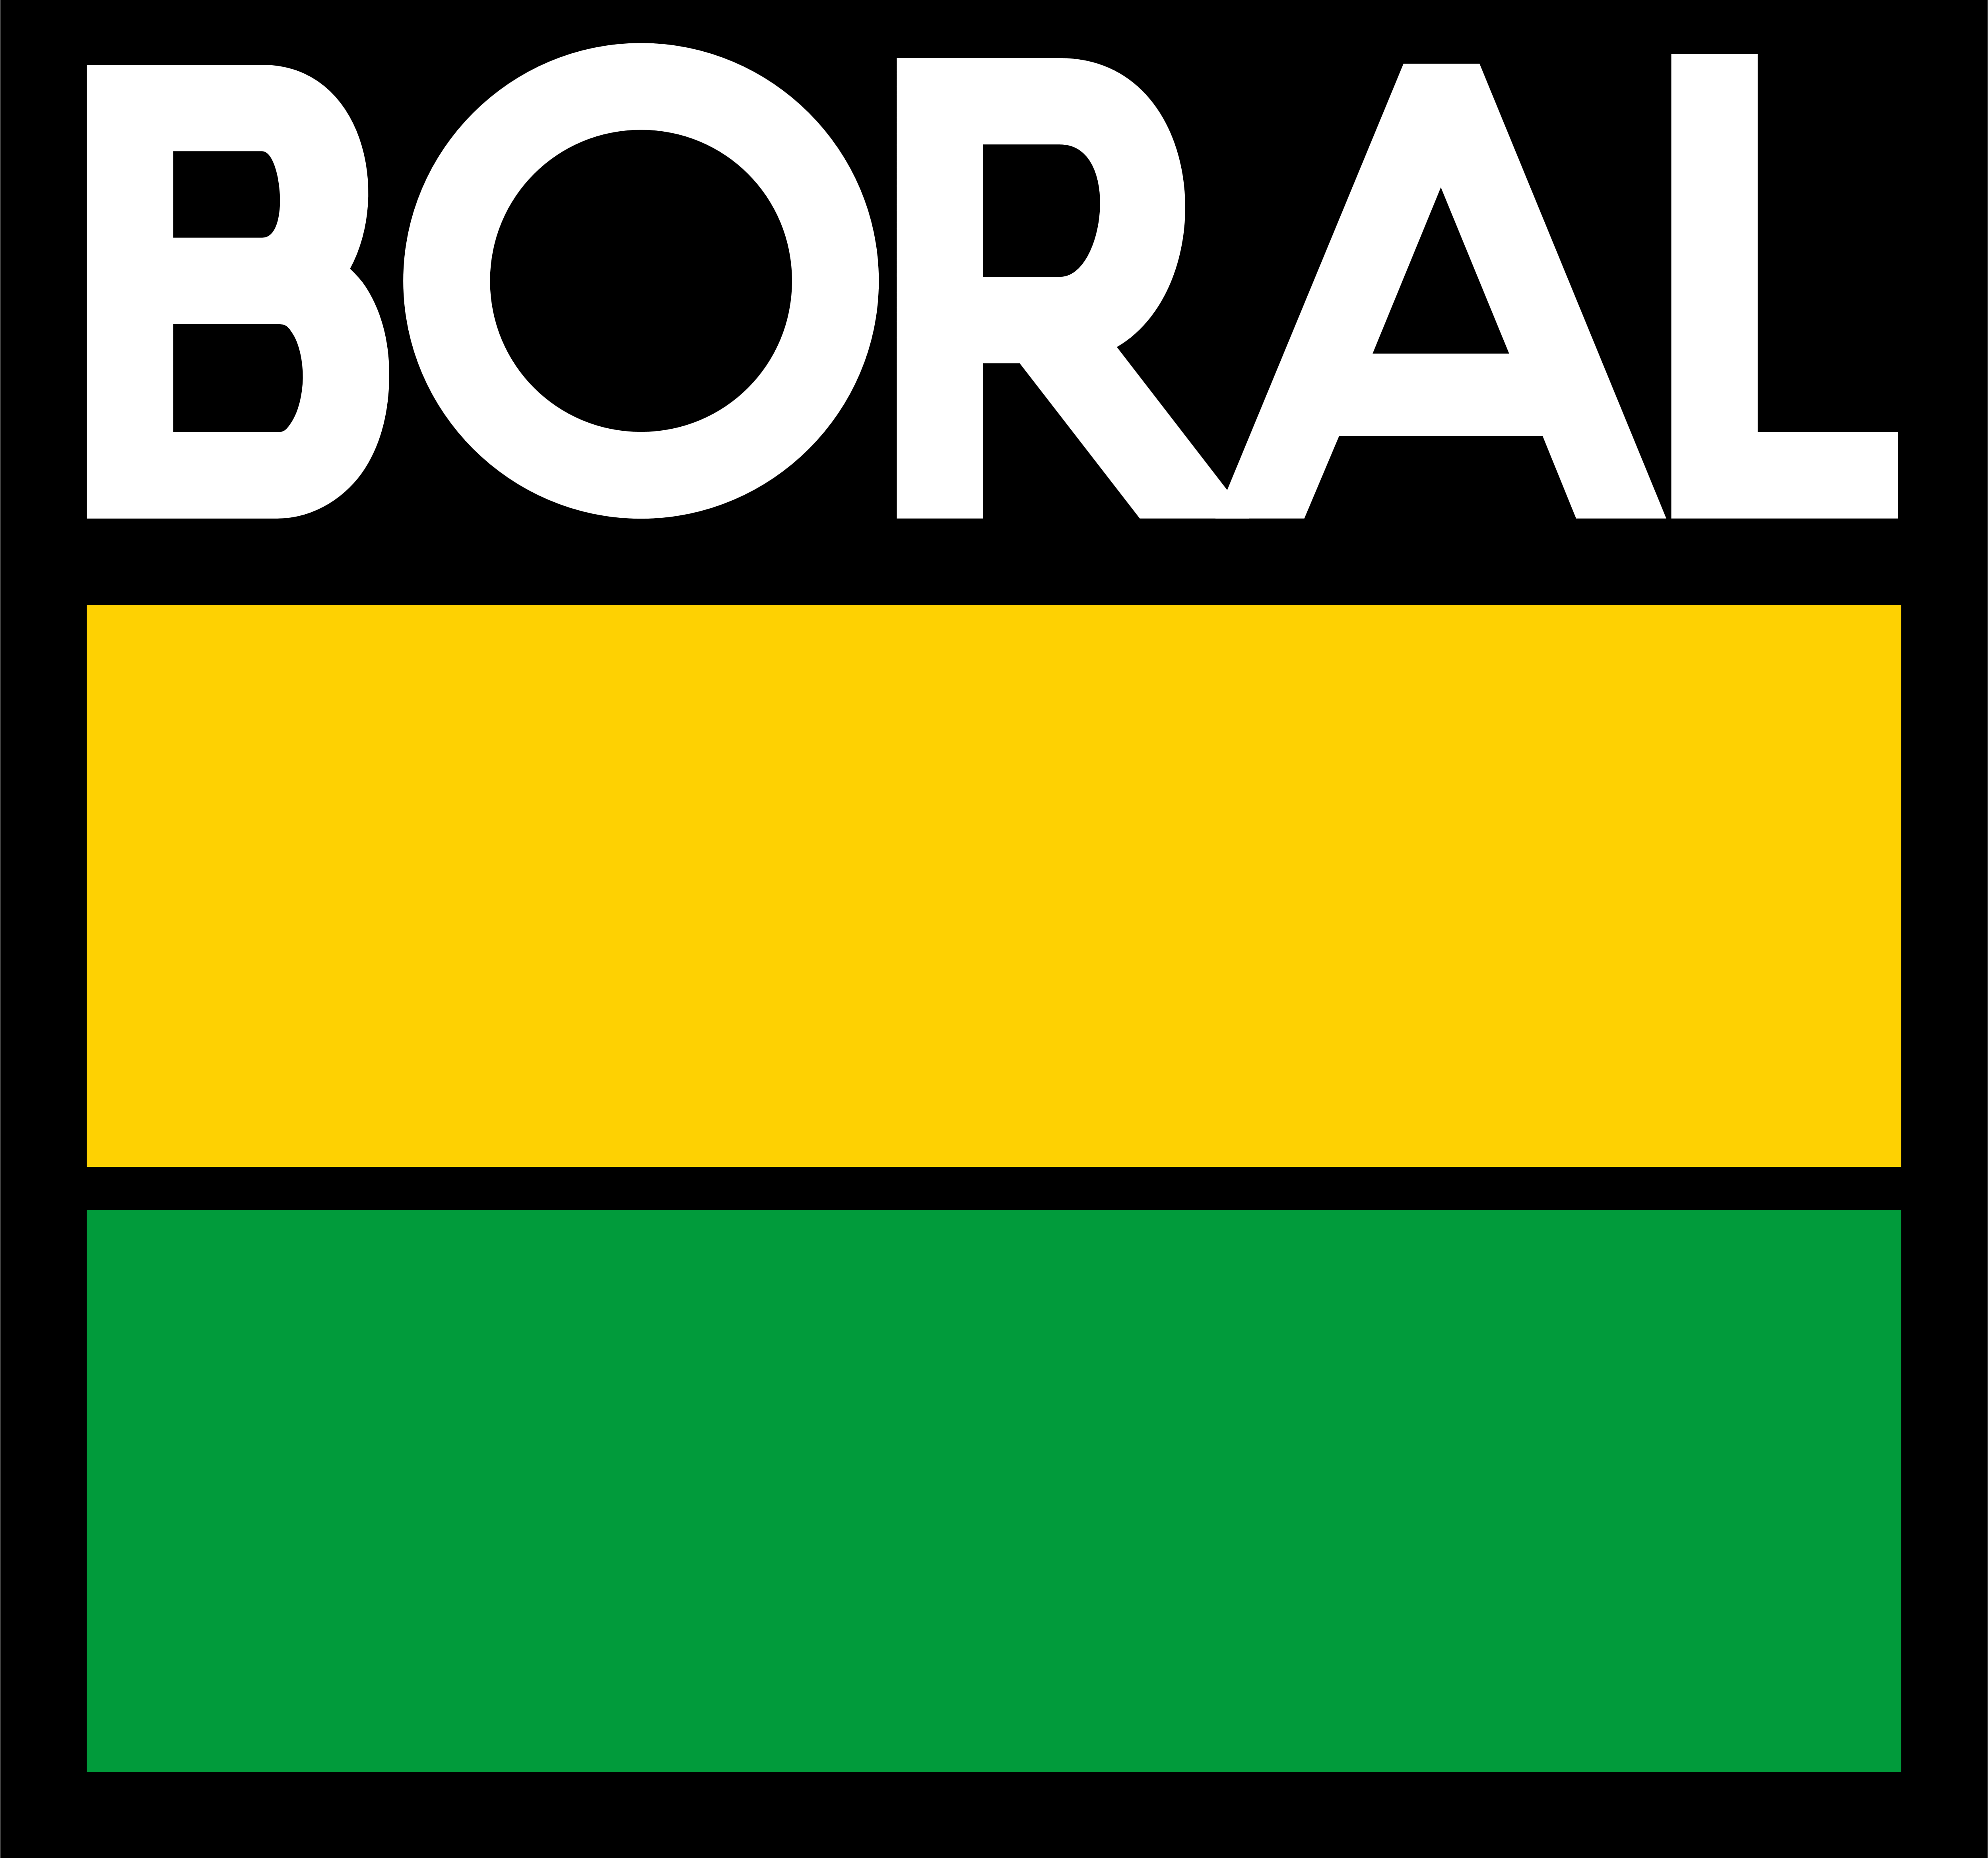 Boral Brand Logo